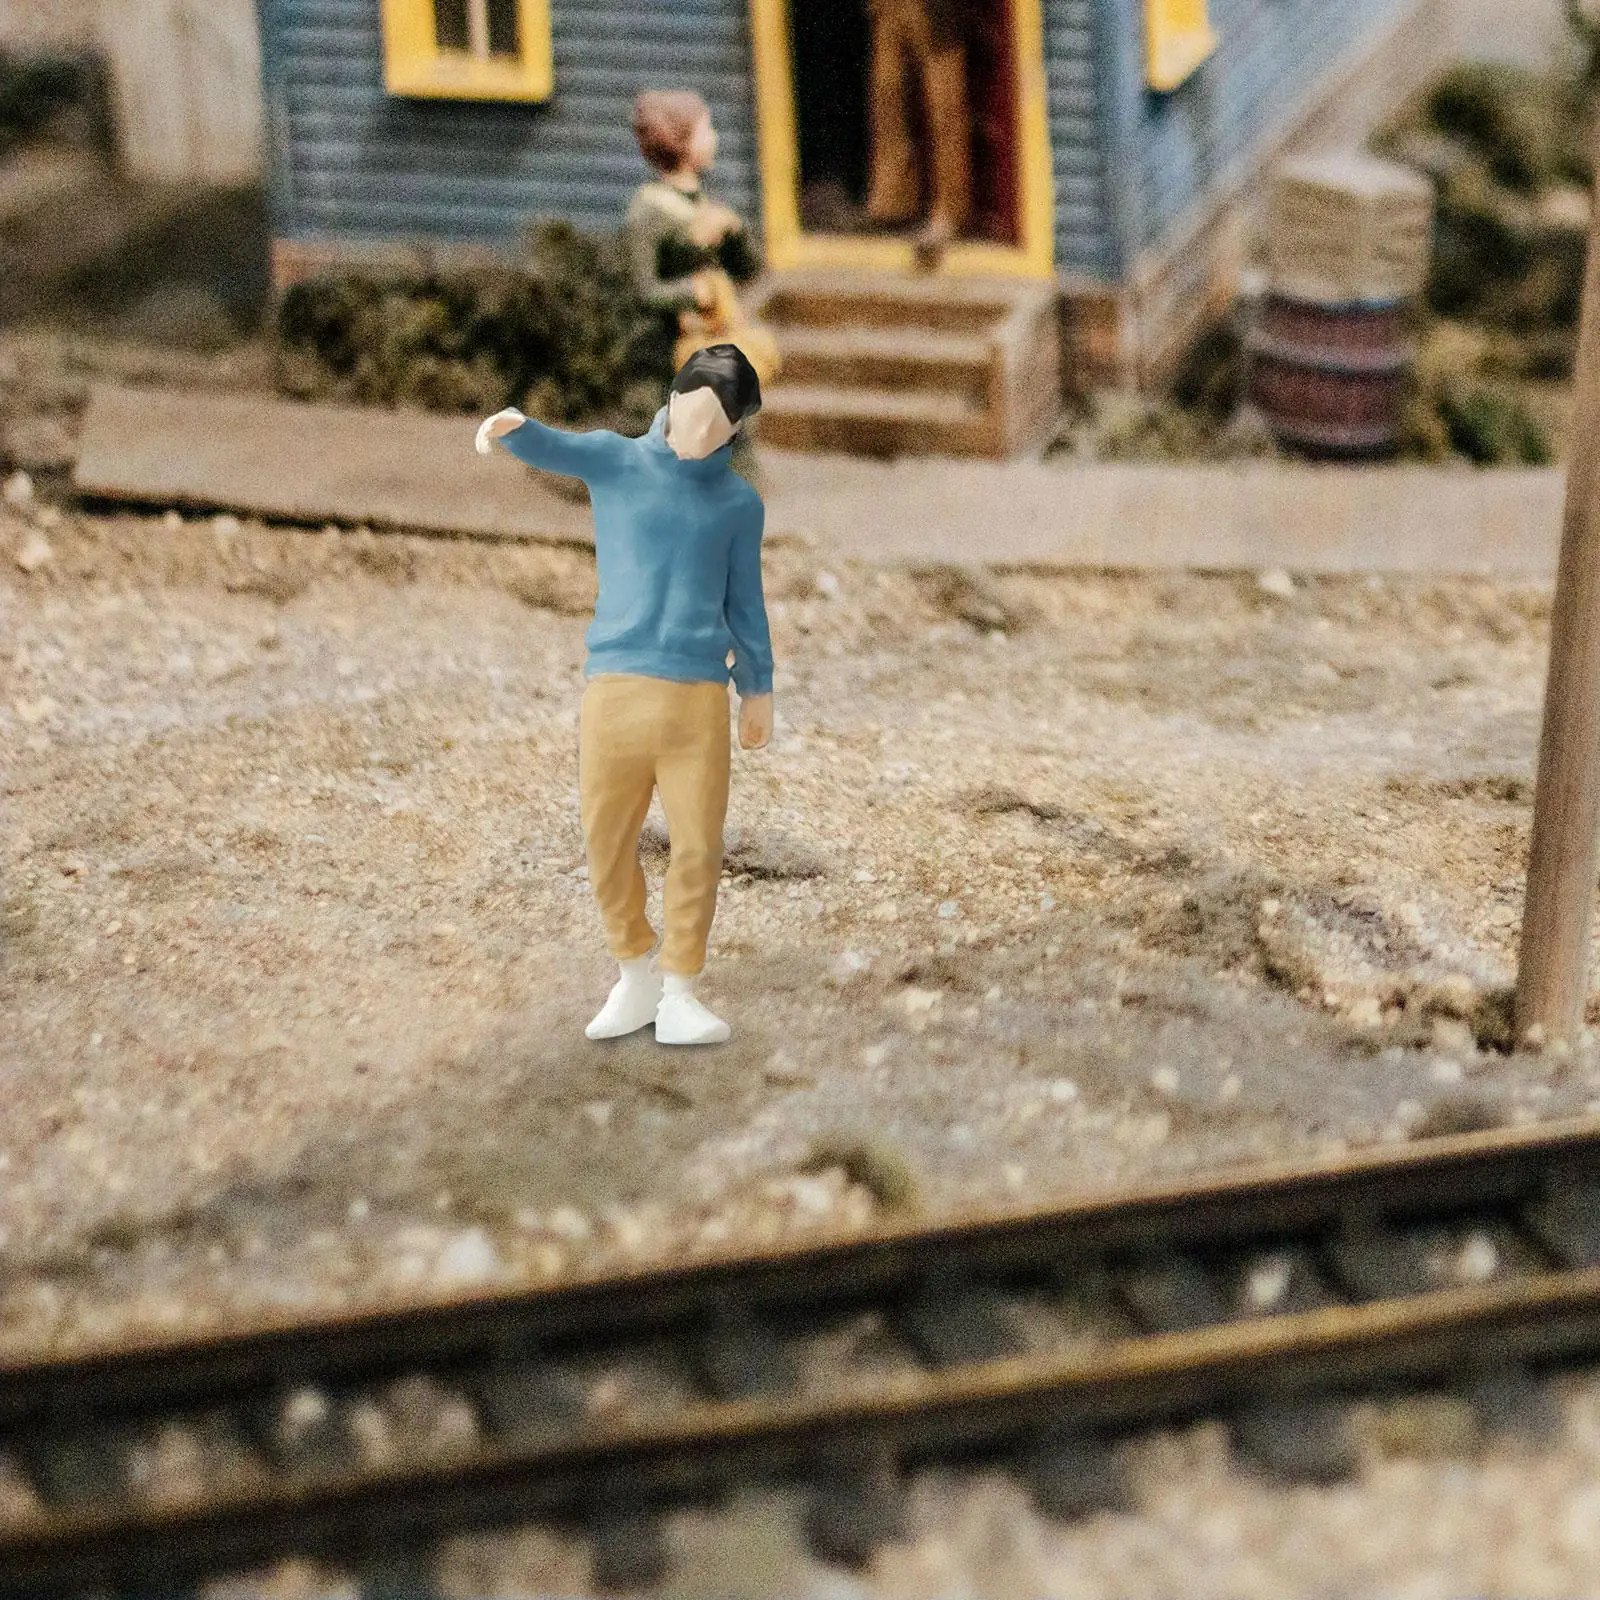 1:64 Realistic Diorama Character Figure Miniature Boys Figurines for Miniature Scene Diorama Dollhouse Photography Props Decor